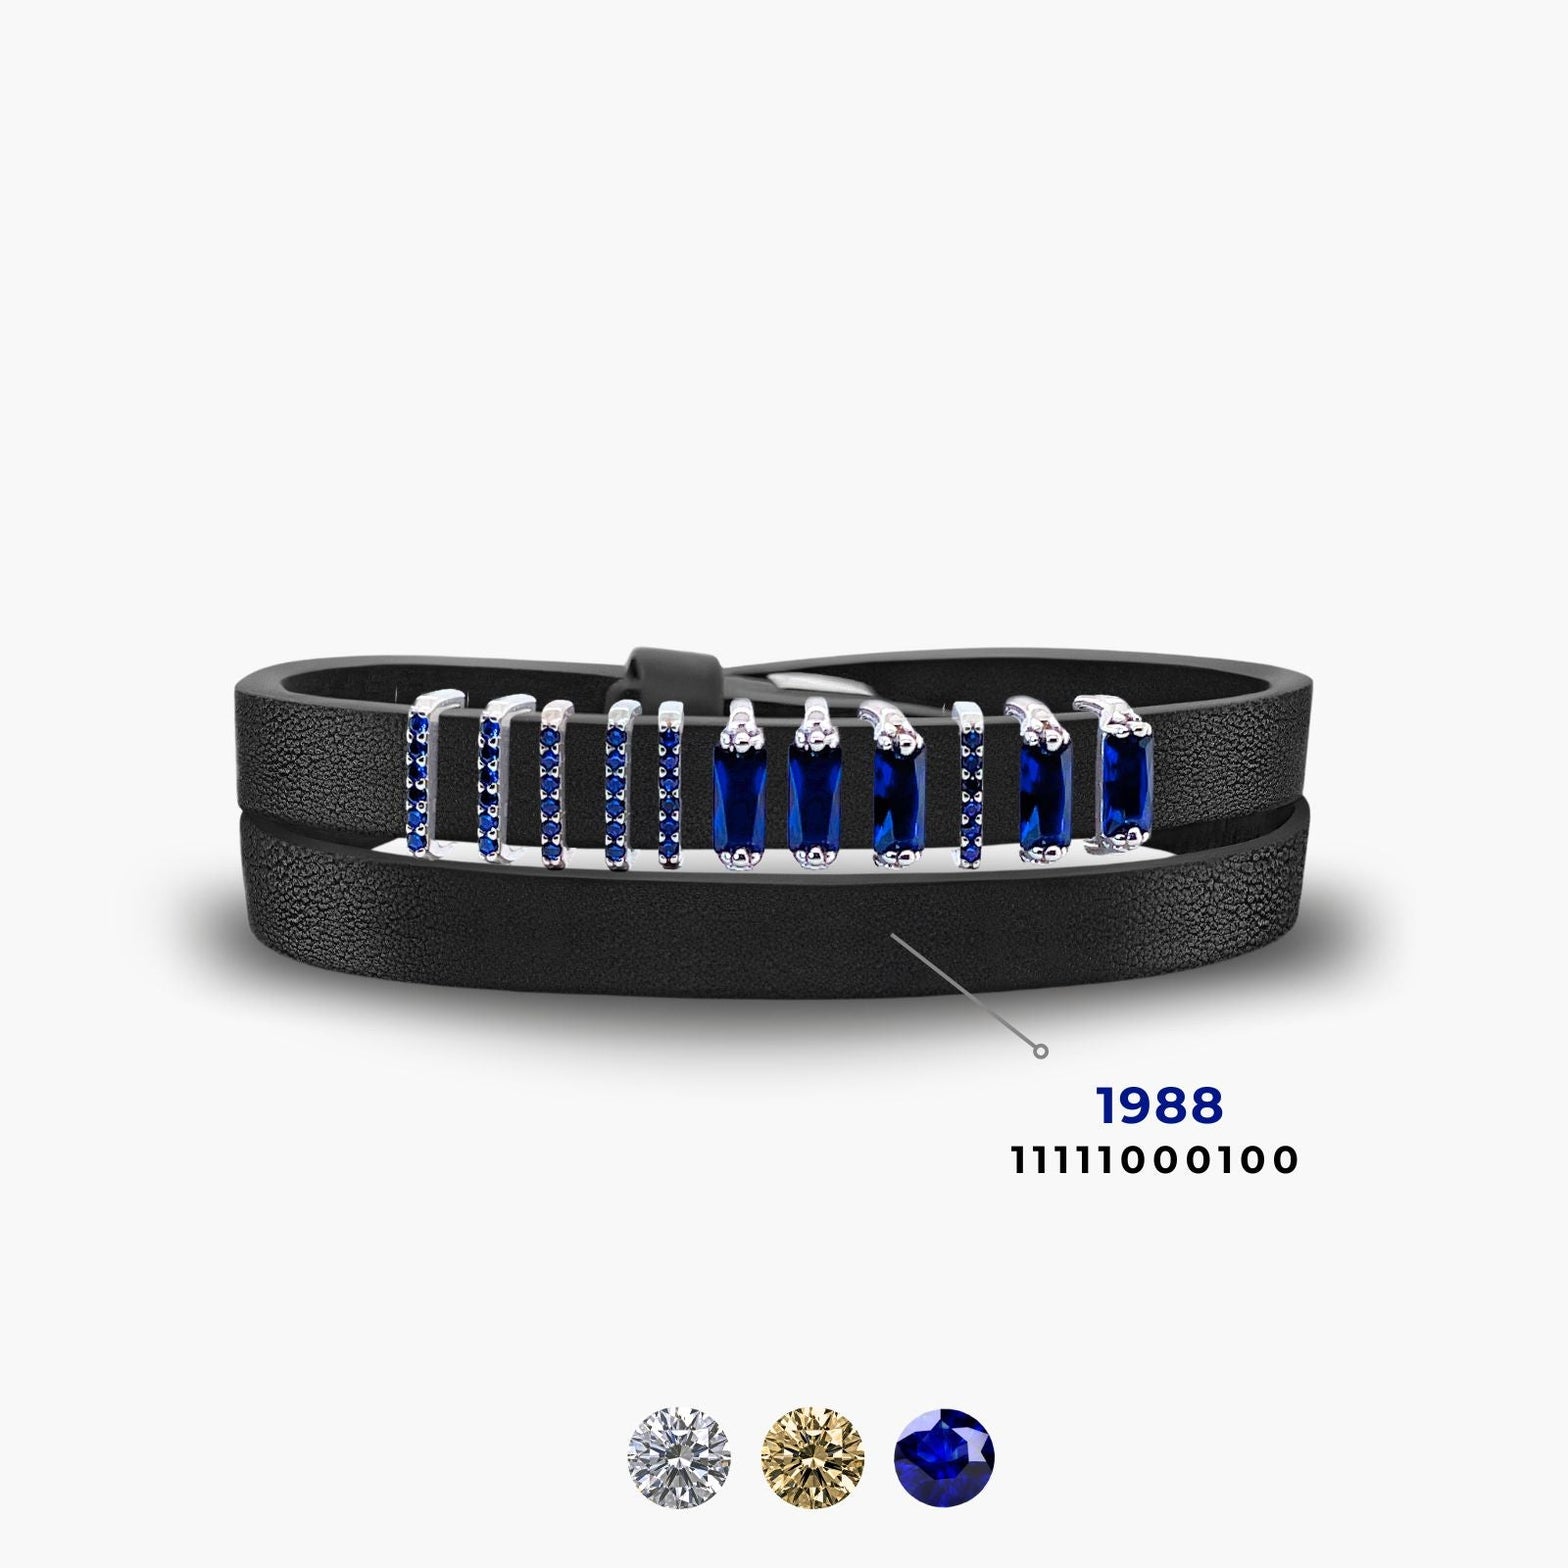 NightSky Charm Encoded Year Bracelet - Black & Sapphire